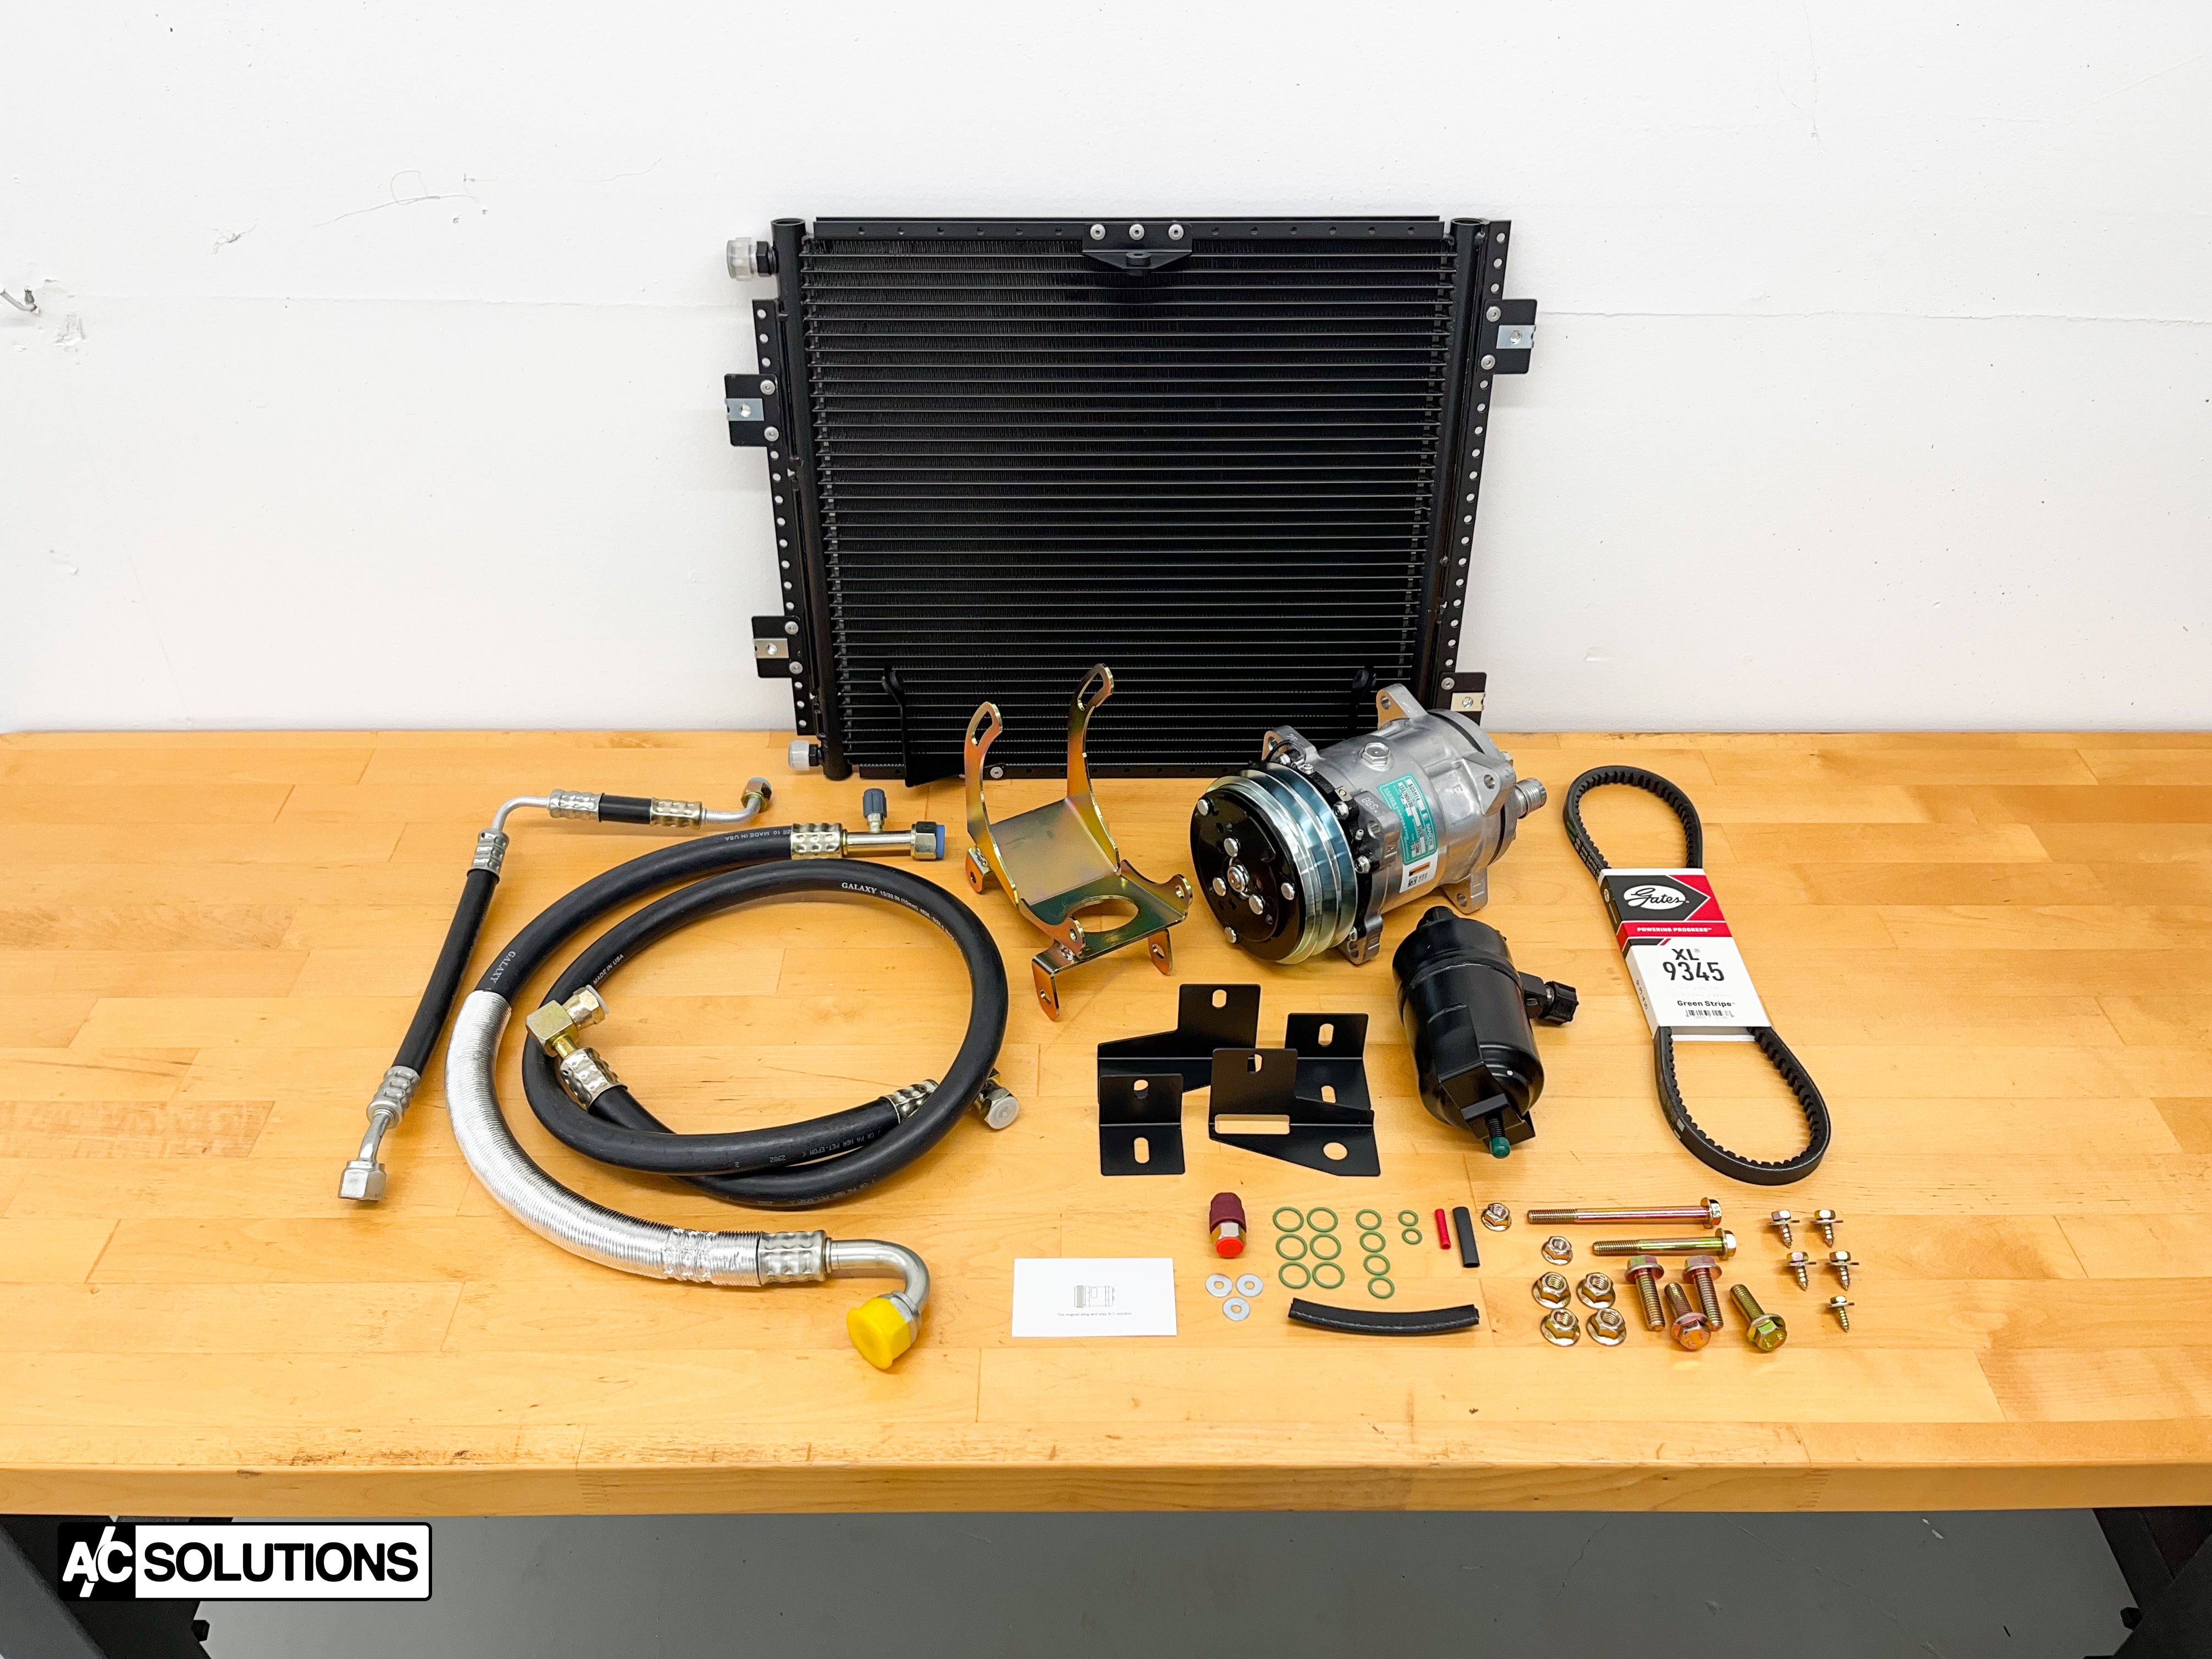 A/C Solutions BMW E28 Complete Conversion Kit